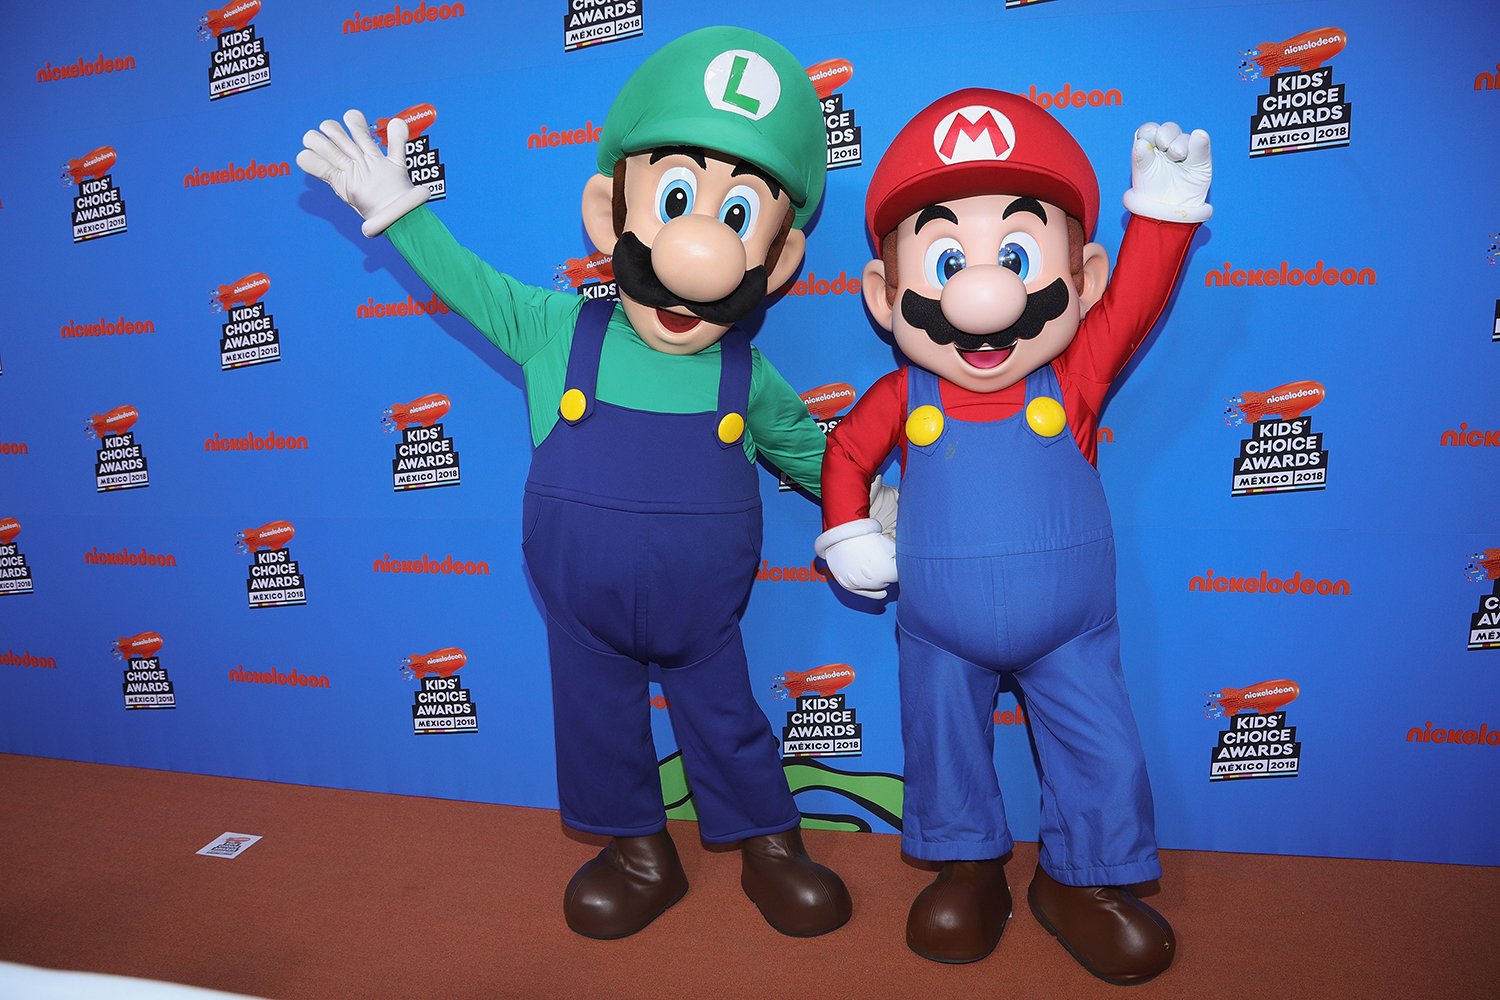 The Super Mario Bros. Movie' Premieres to Worse Rotten Tomatoes